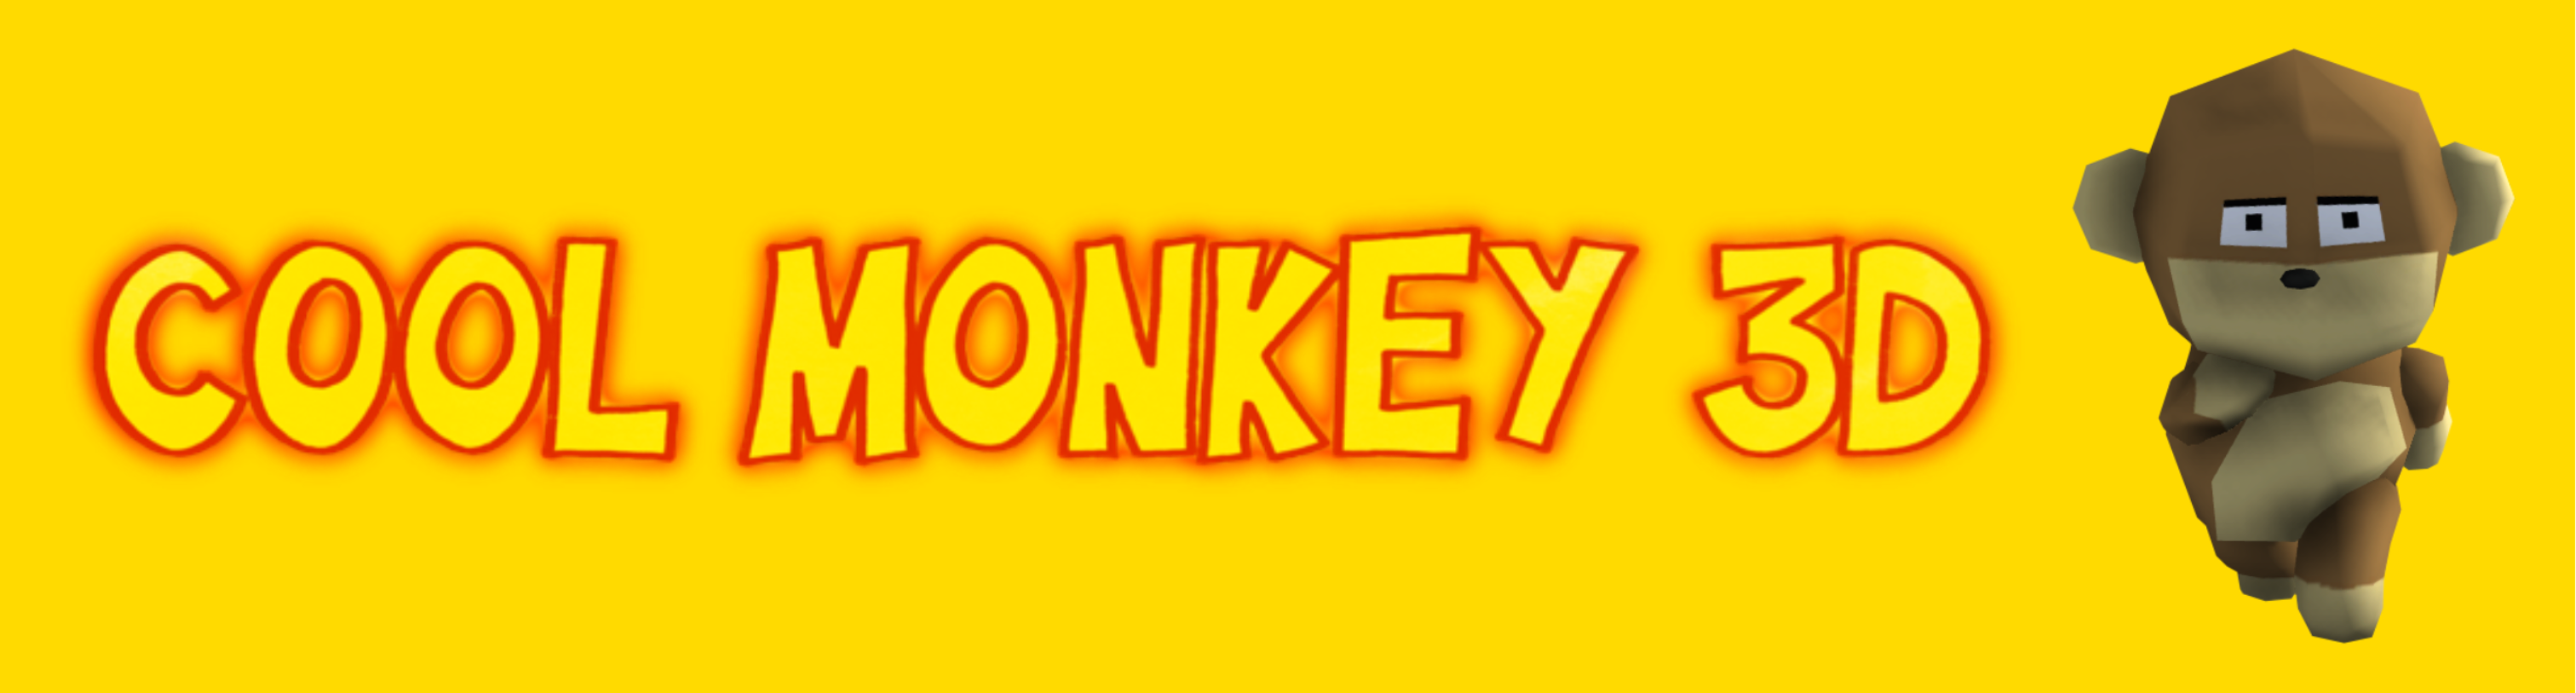 Cool Monkey 3D